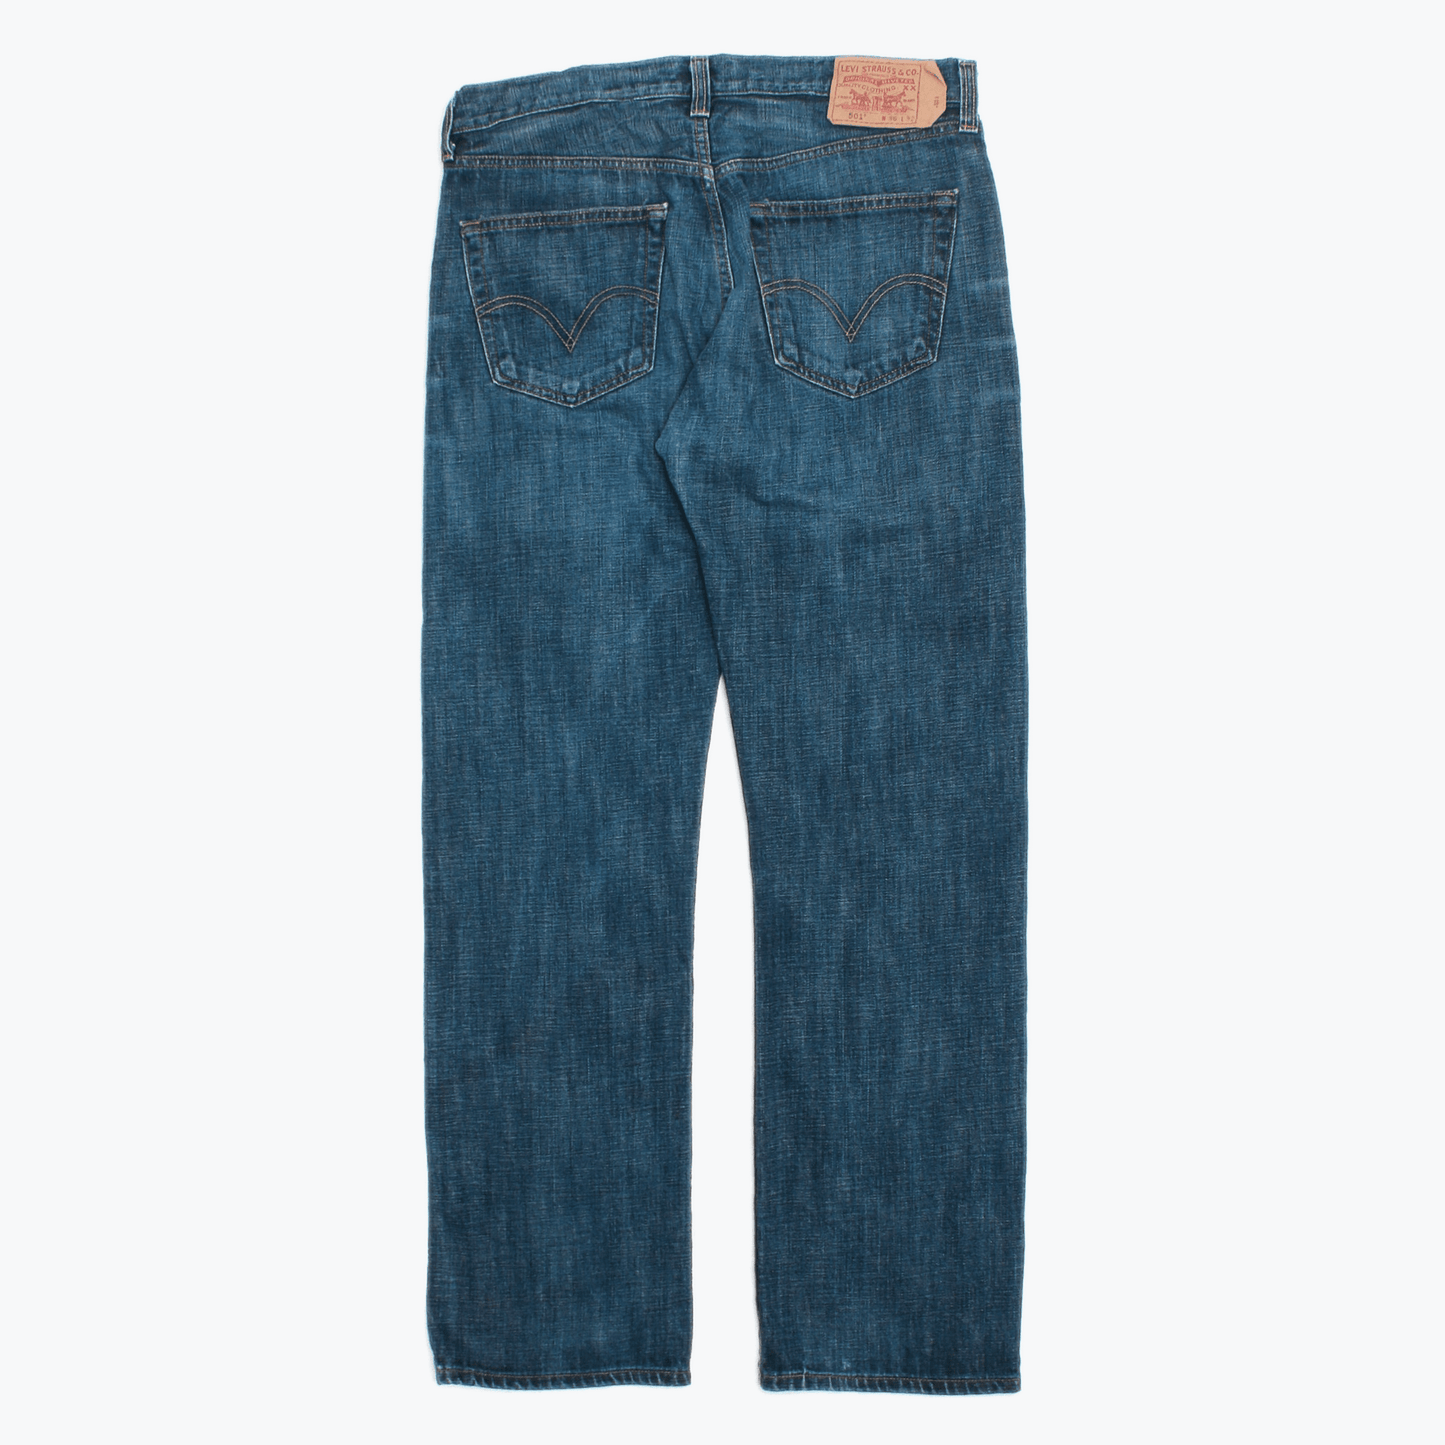 Vintage Levi's 501 Jeans - Denim Indigo Wash -36" 32" - American Madness